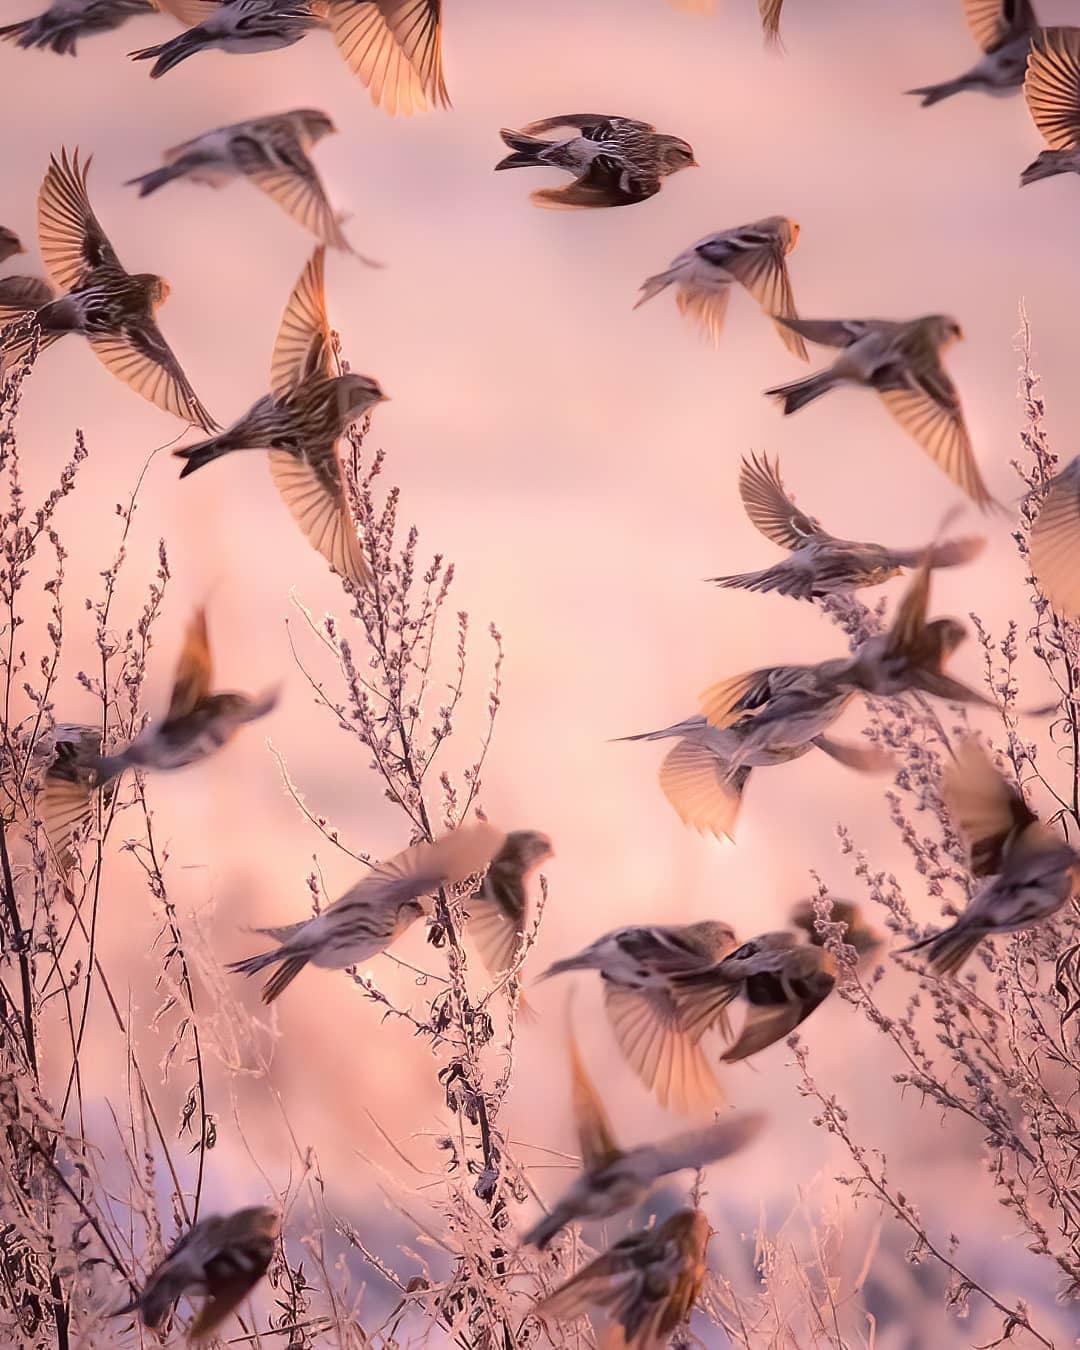  晨光中纷飞的金翅鸟，来自摄影师Jukka Risikko。 